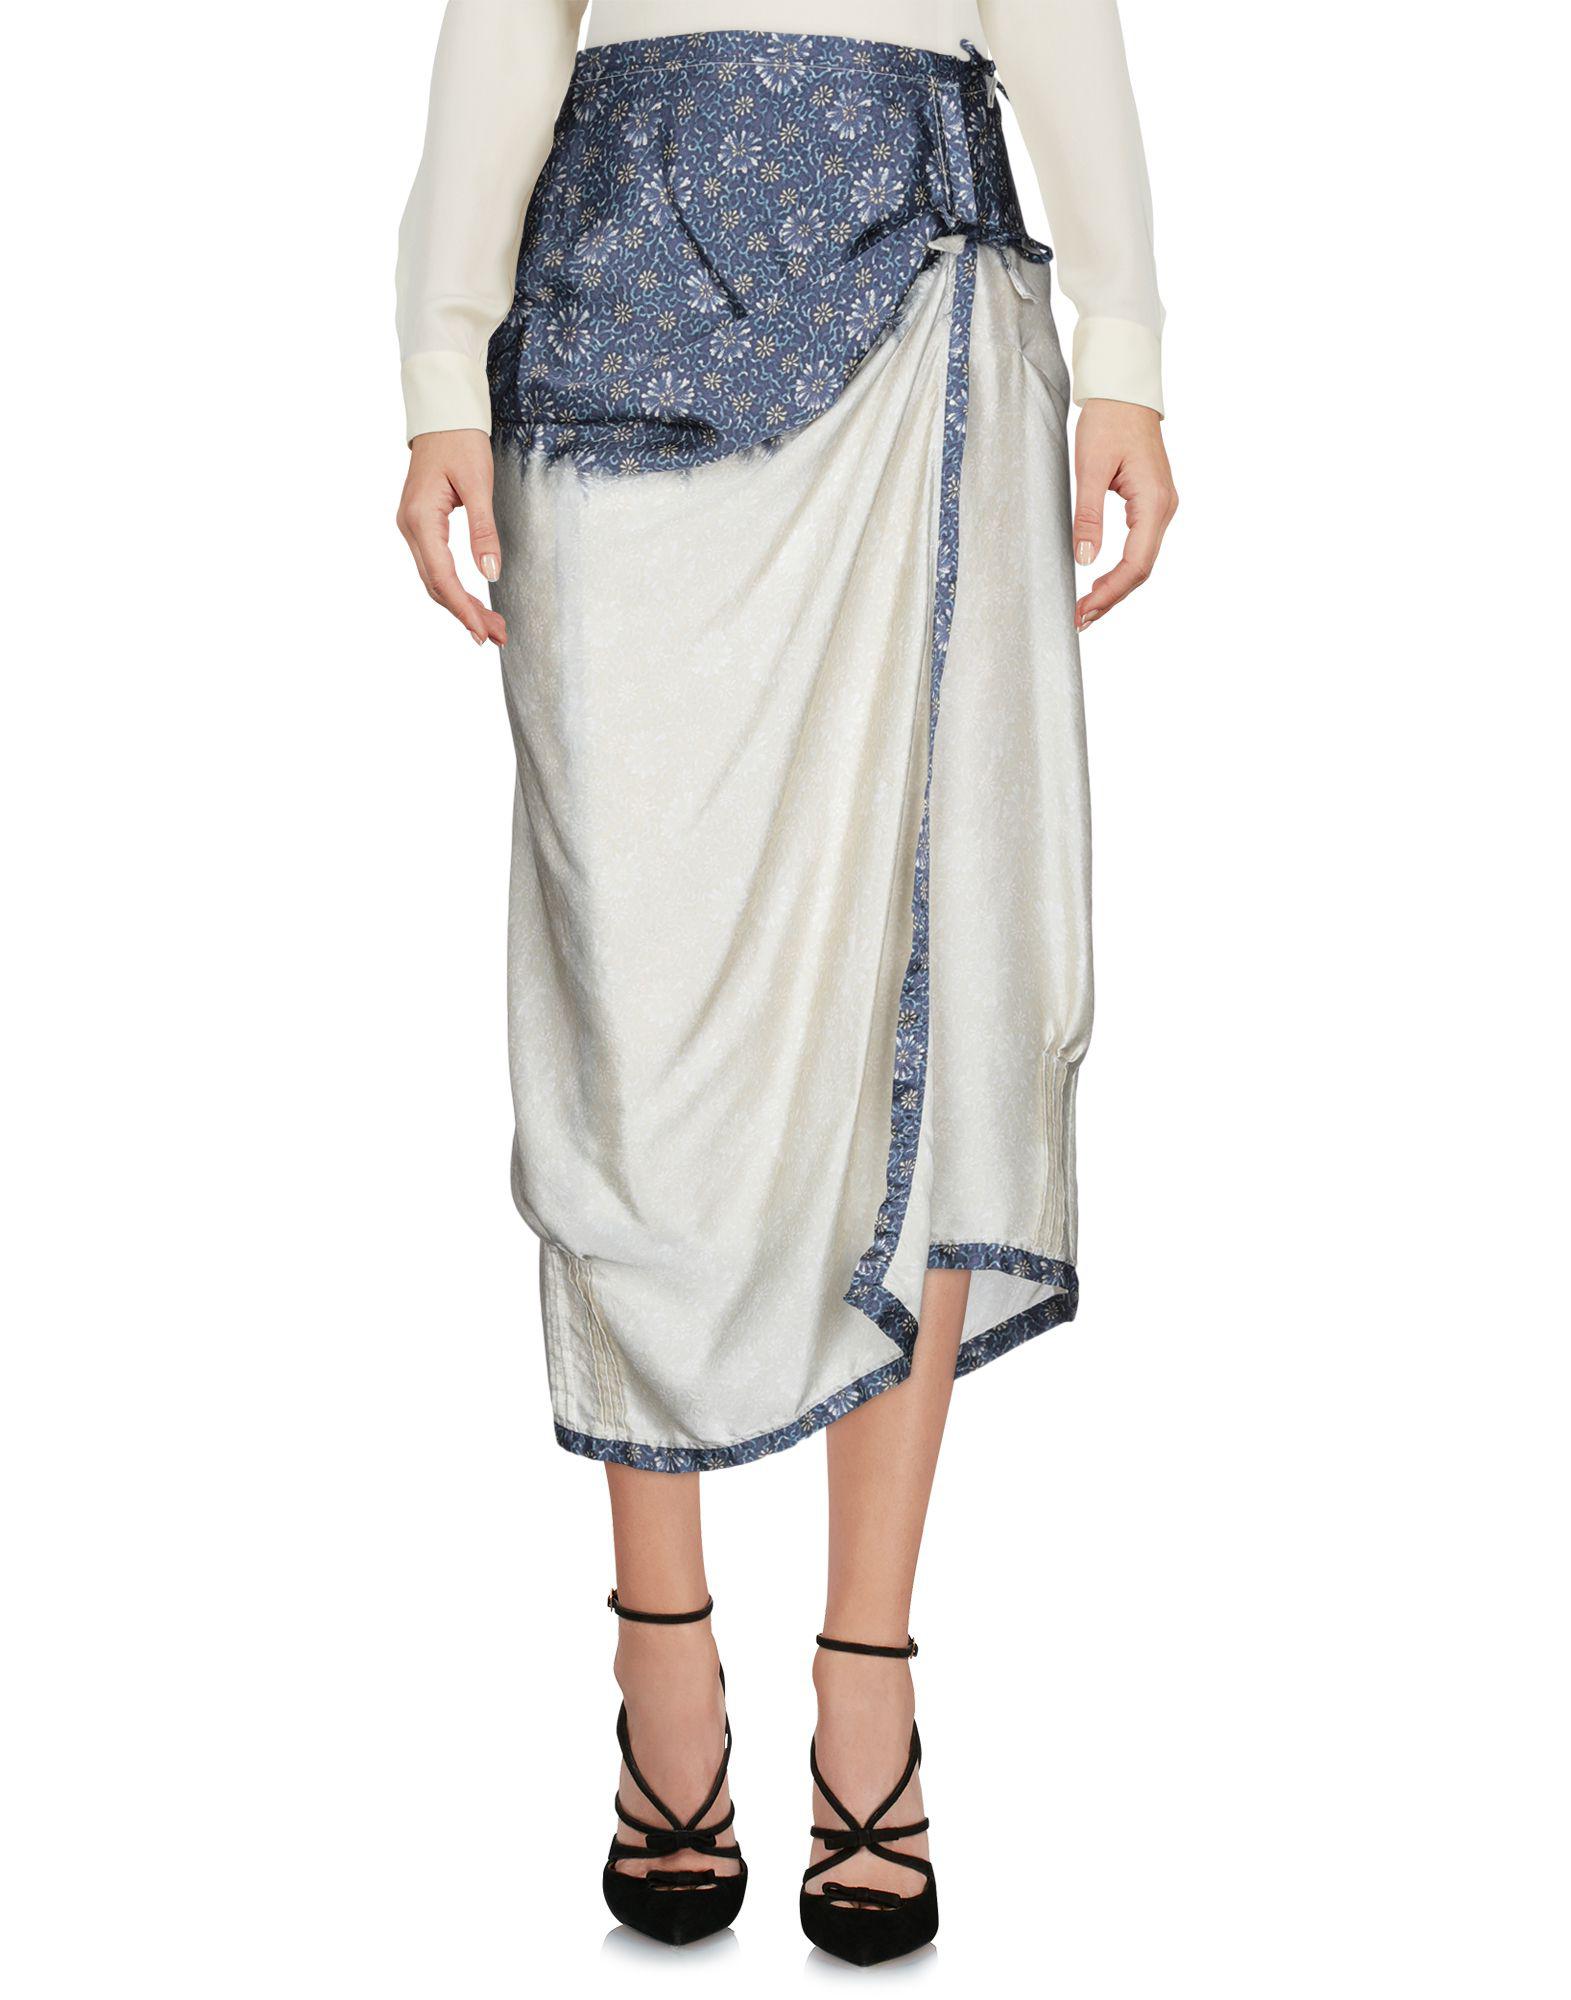 Dries Van Noten 3/4 Length Skirt in Blue - Lyst